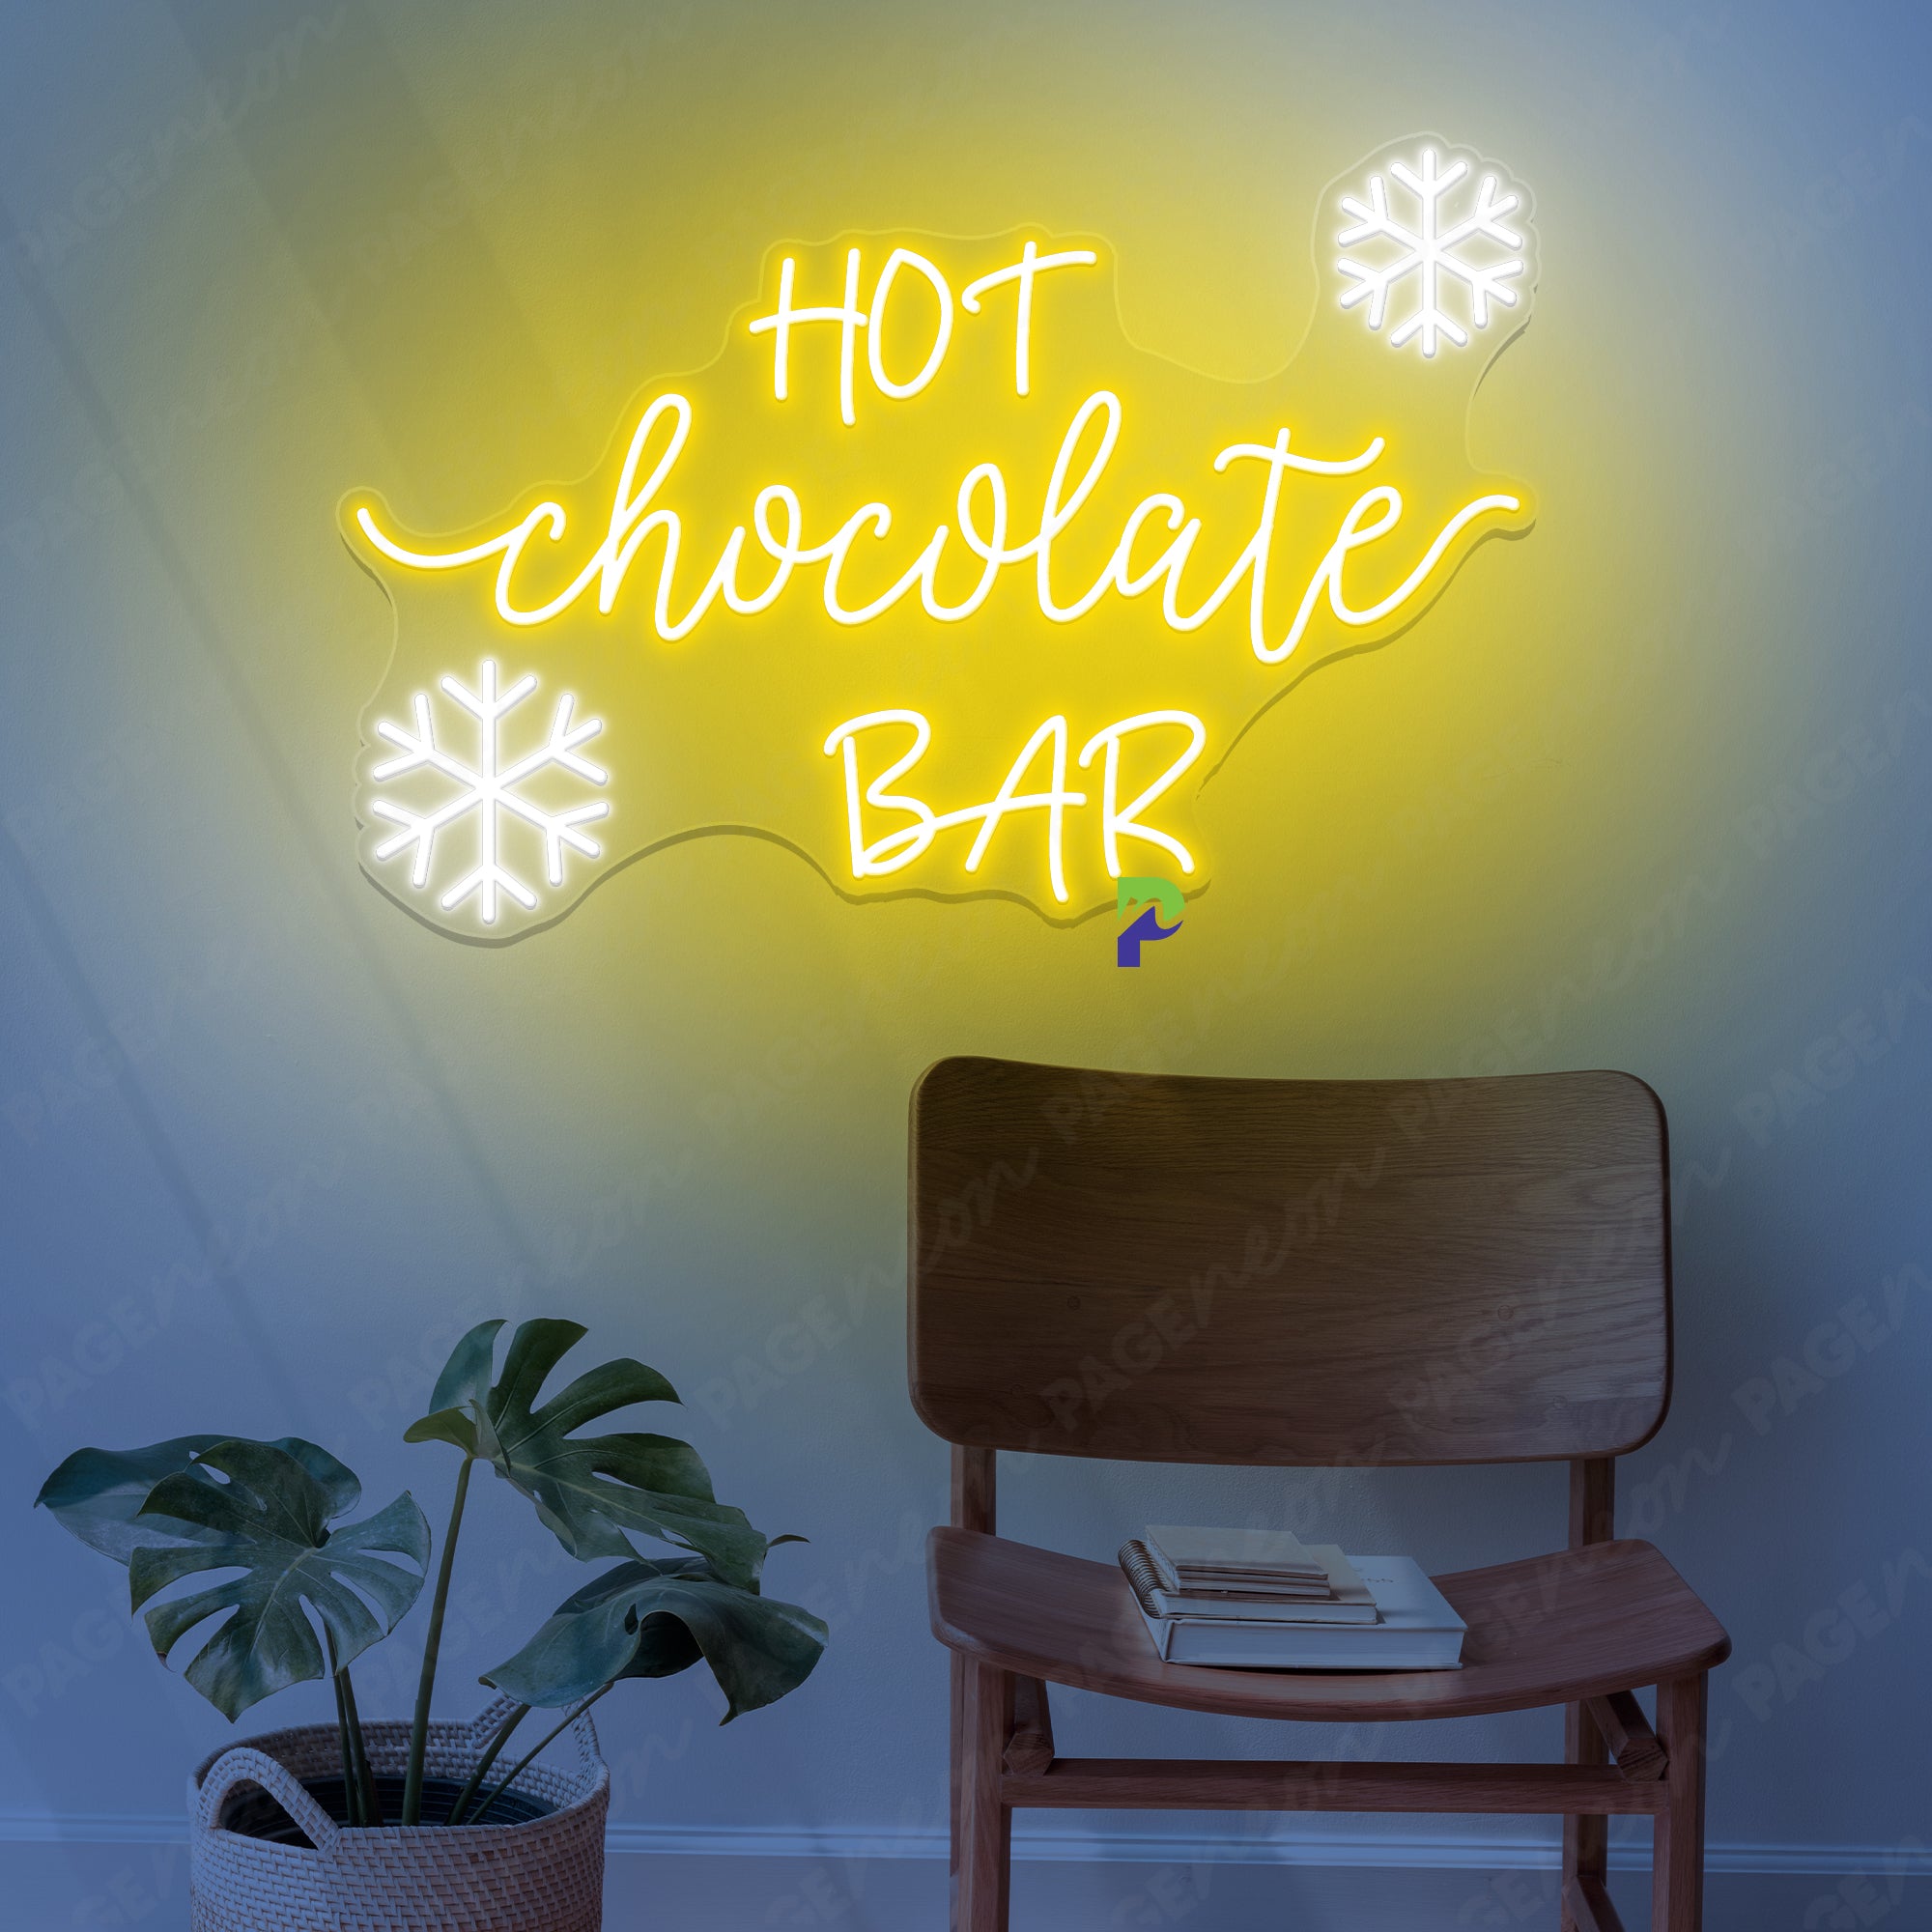 Hot Chocolate Bar Neon Sign Best Led Light For Cafe Shop